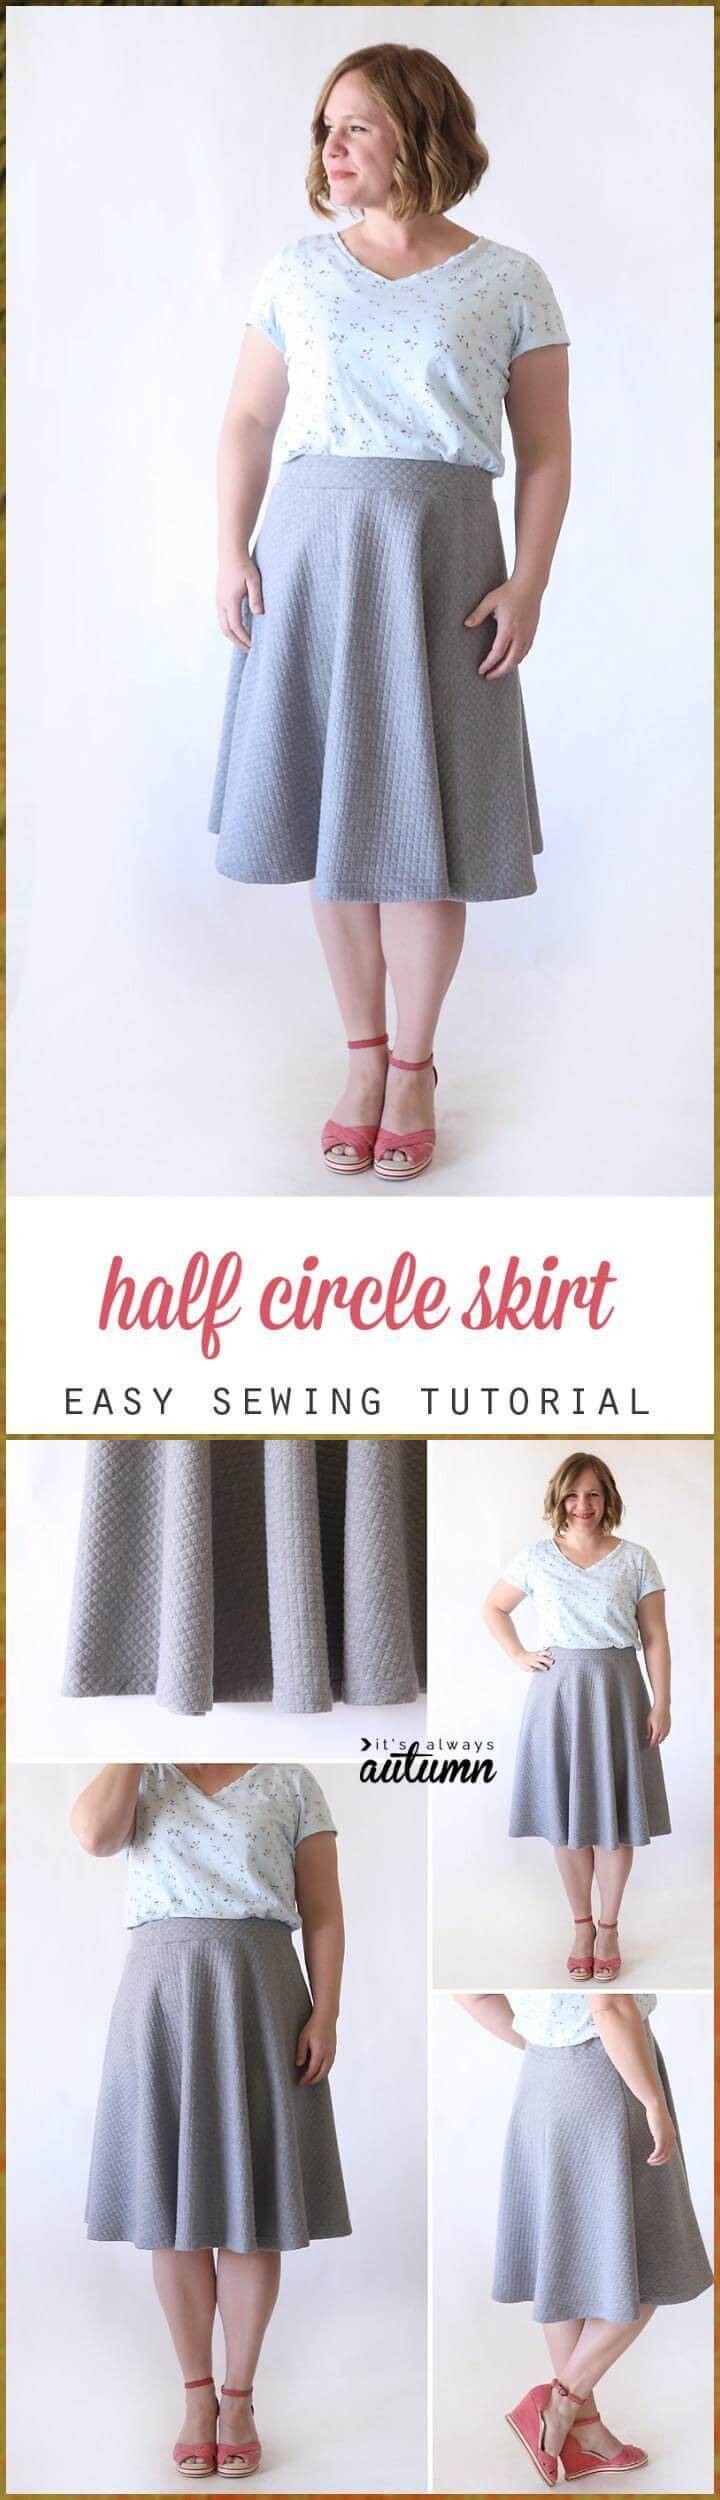 DIY super easy half circle skirt sewing tutorial